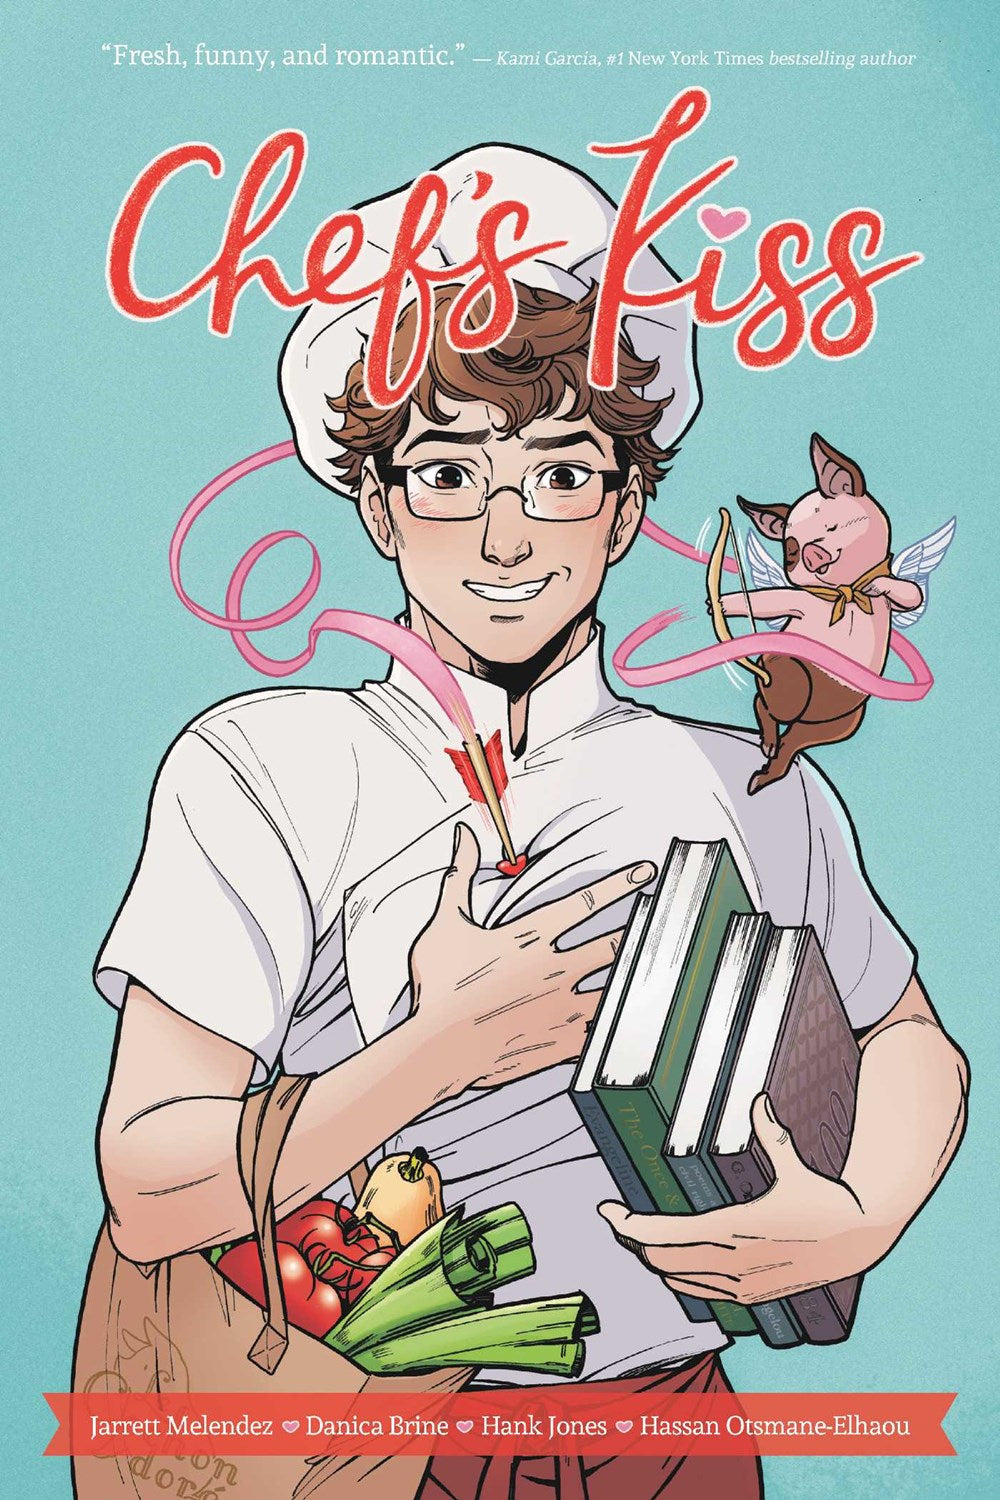 Chef's Kiss